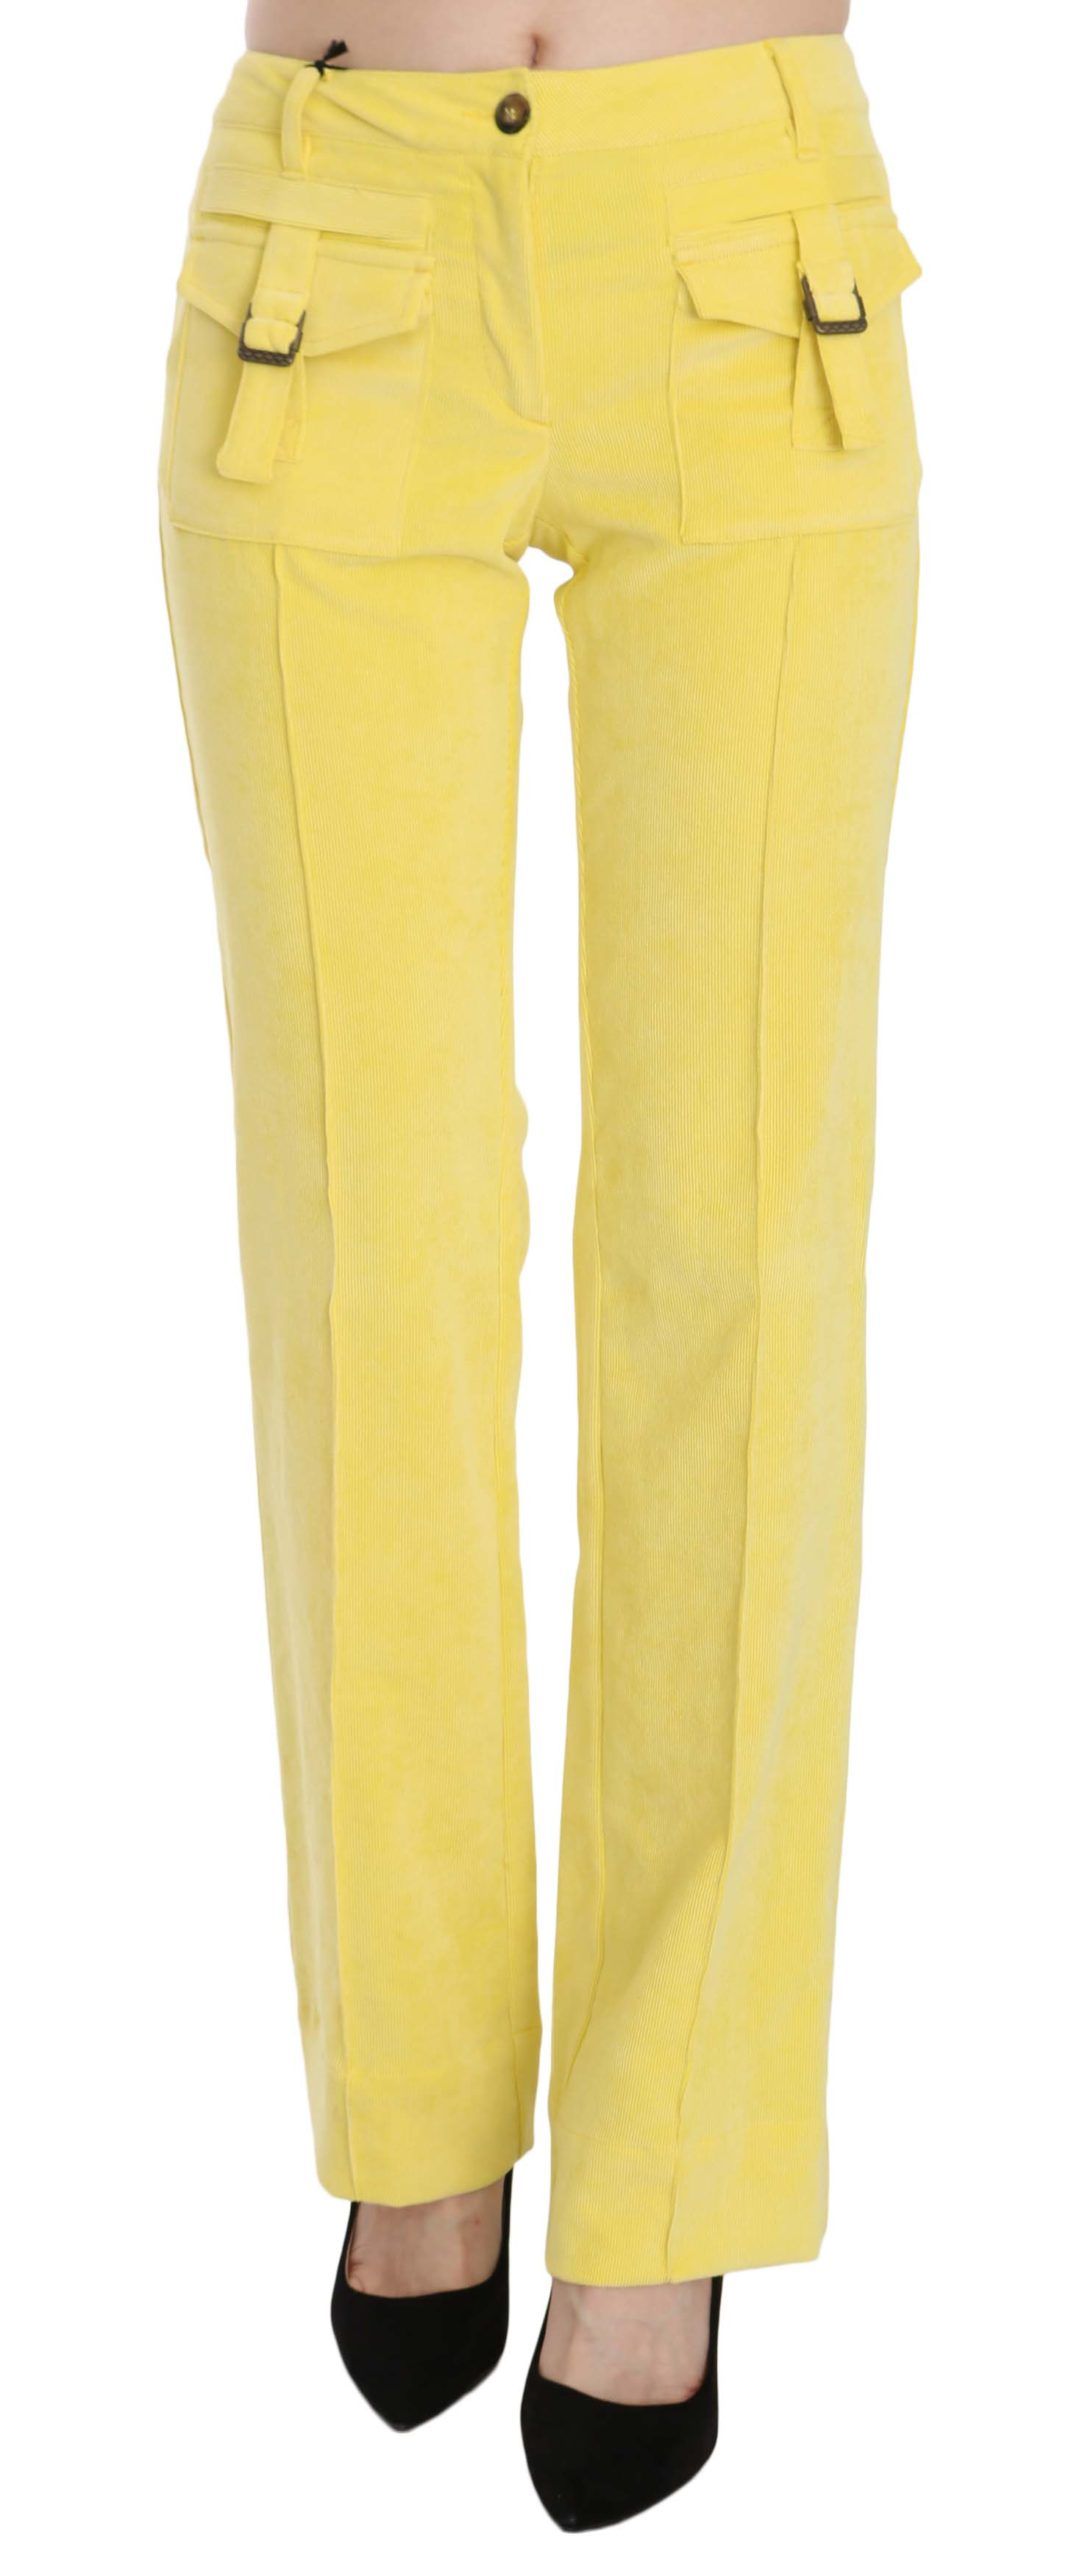 Just Cavalli Chic Yellow Corduroy Mid Waist Pants IT46